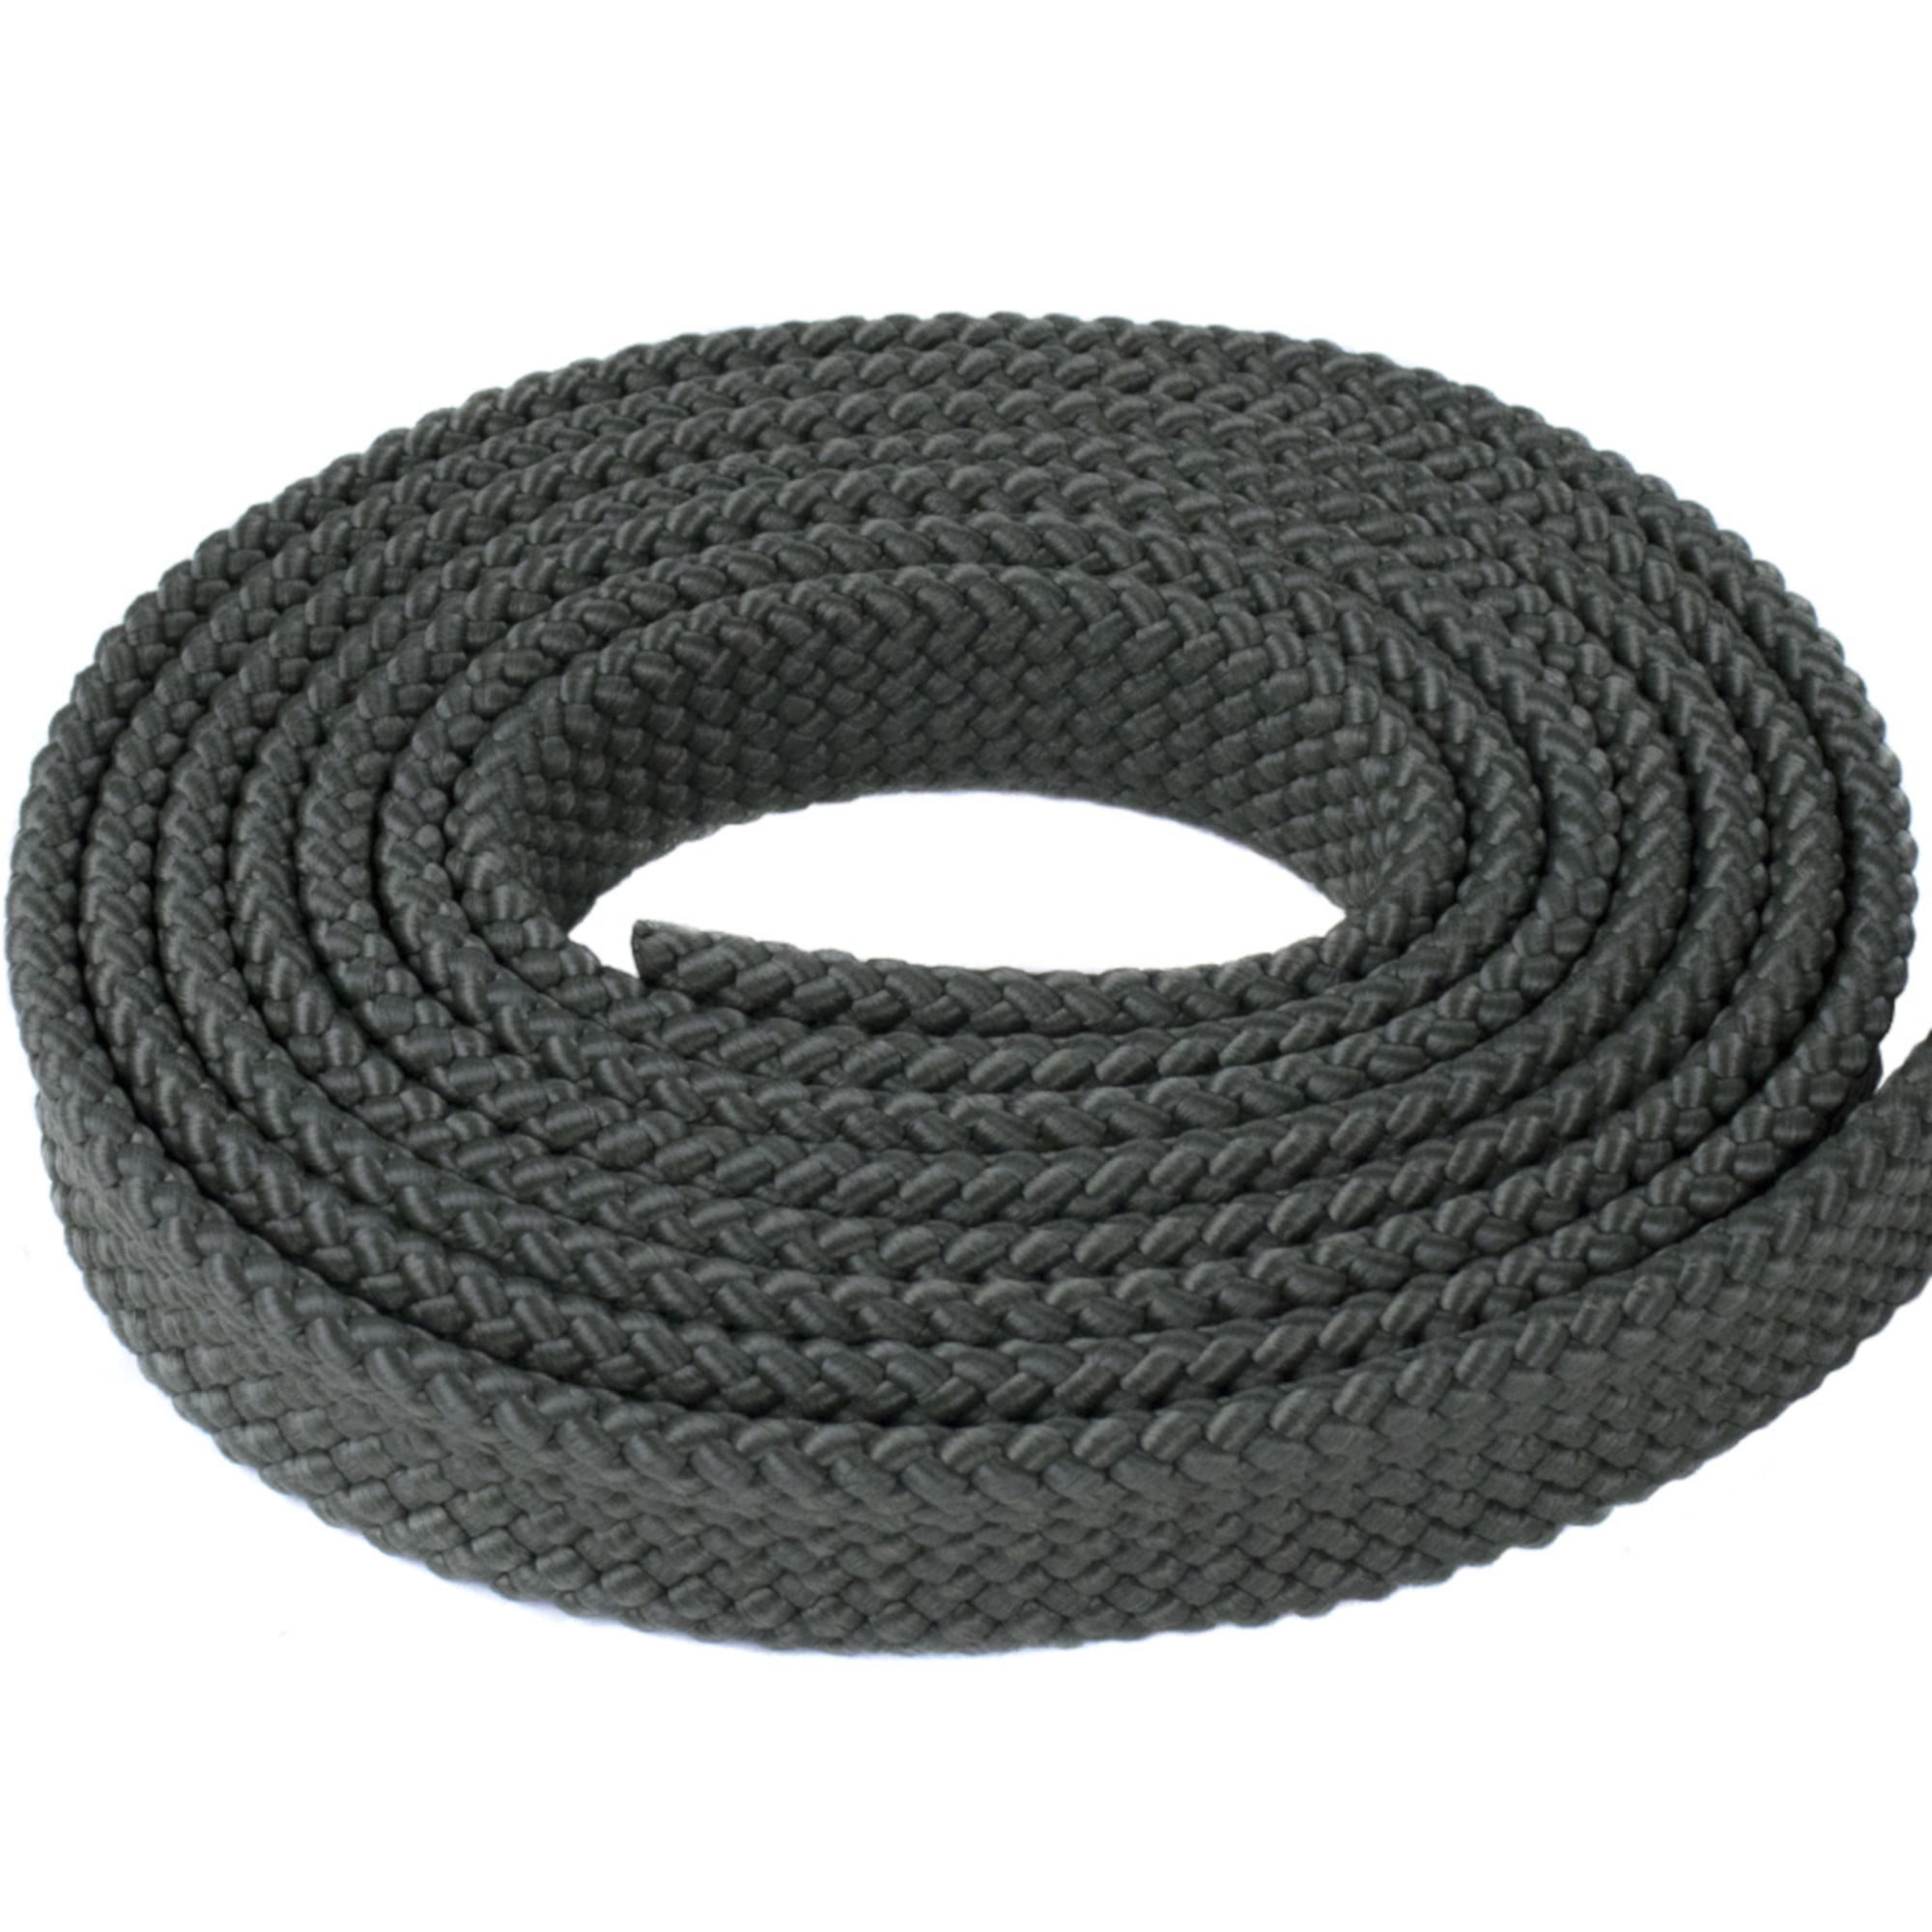 1/2" x 100 ft Camo Flat/Hollow Braid Polypropylene Rope Made in USA. 